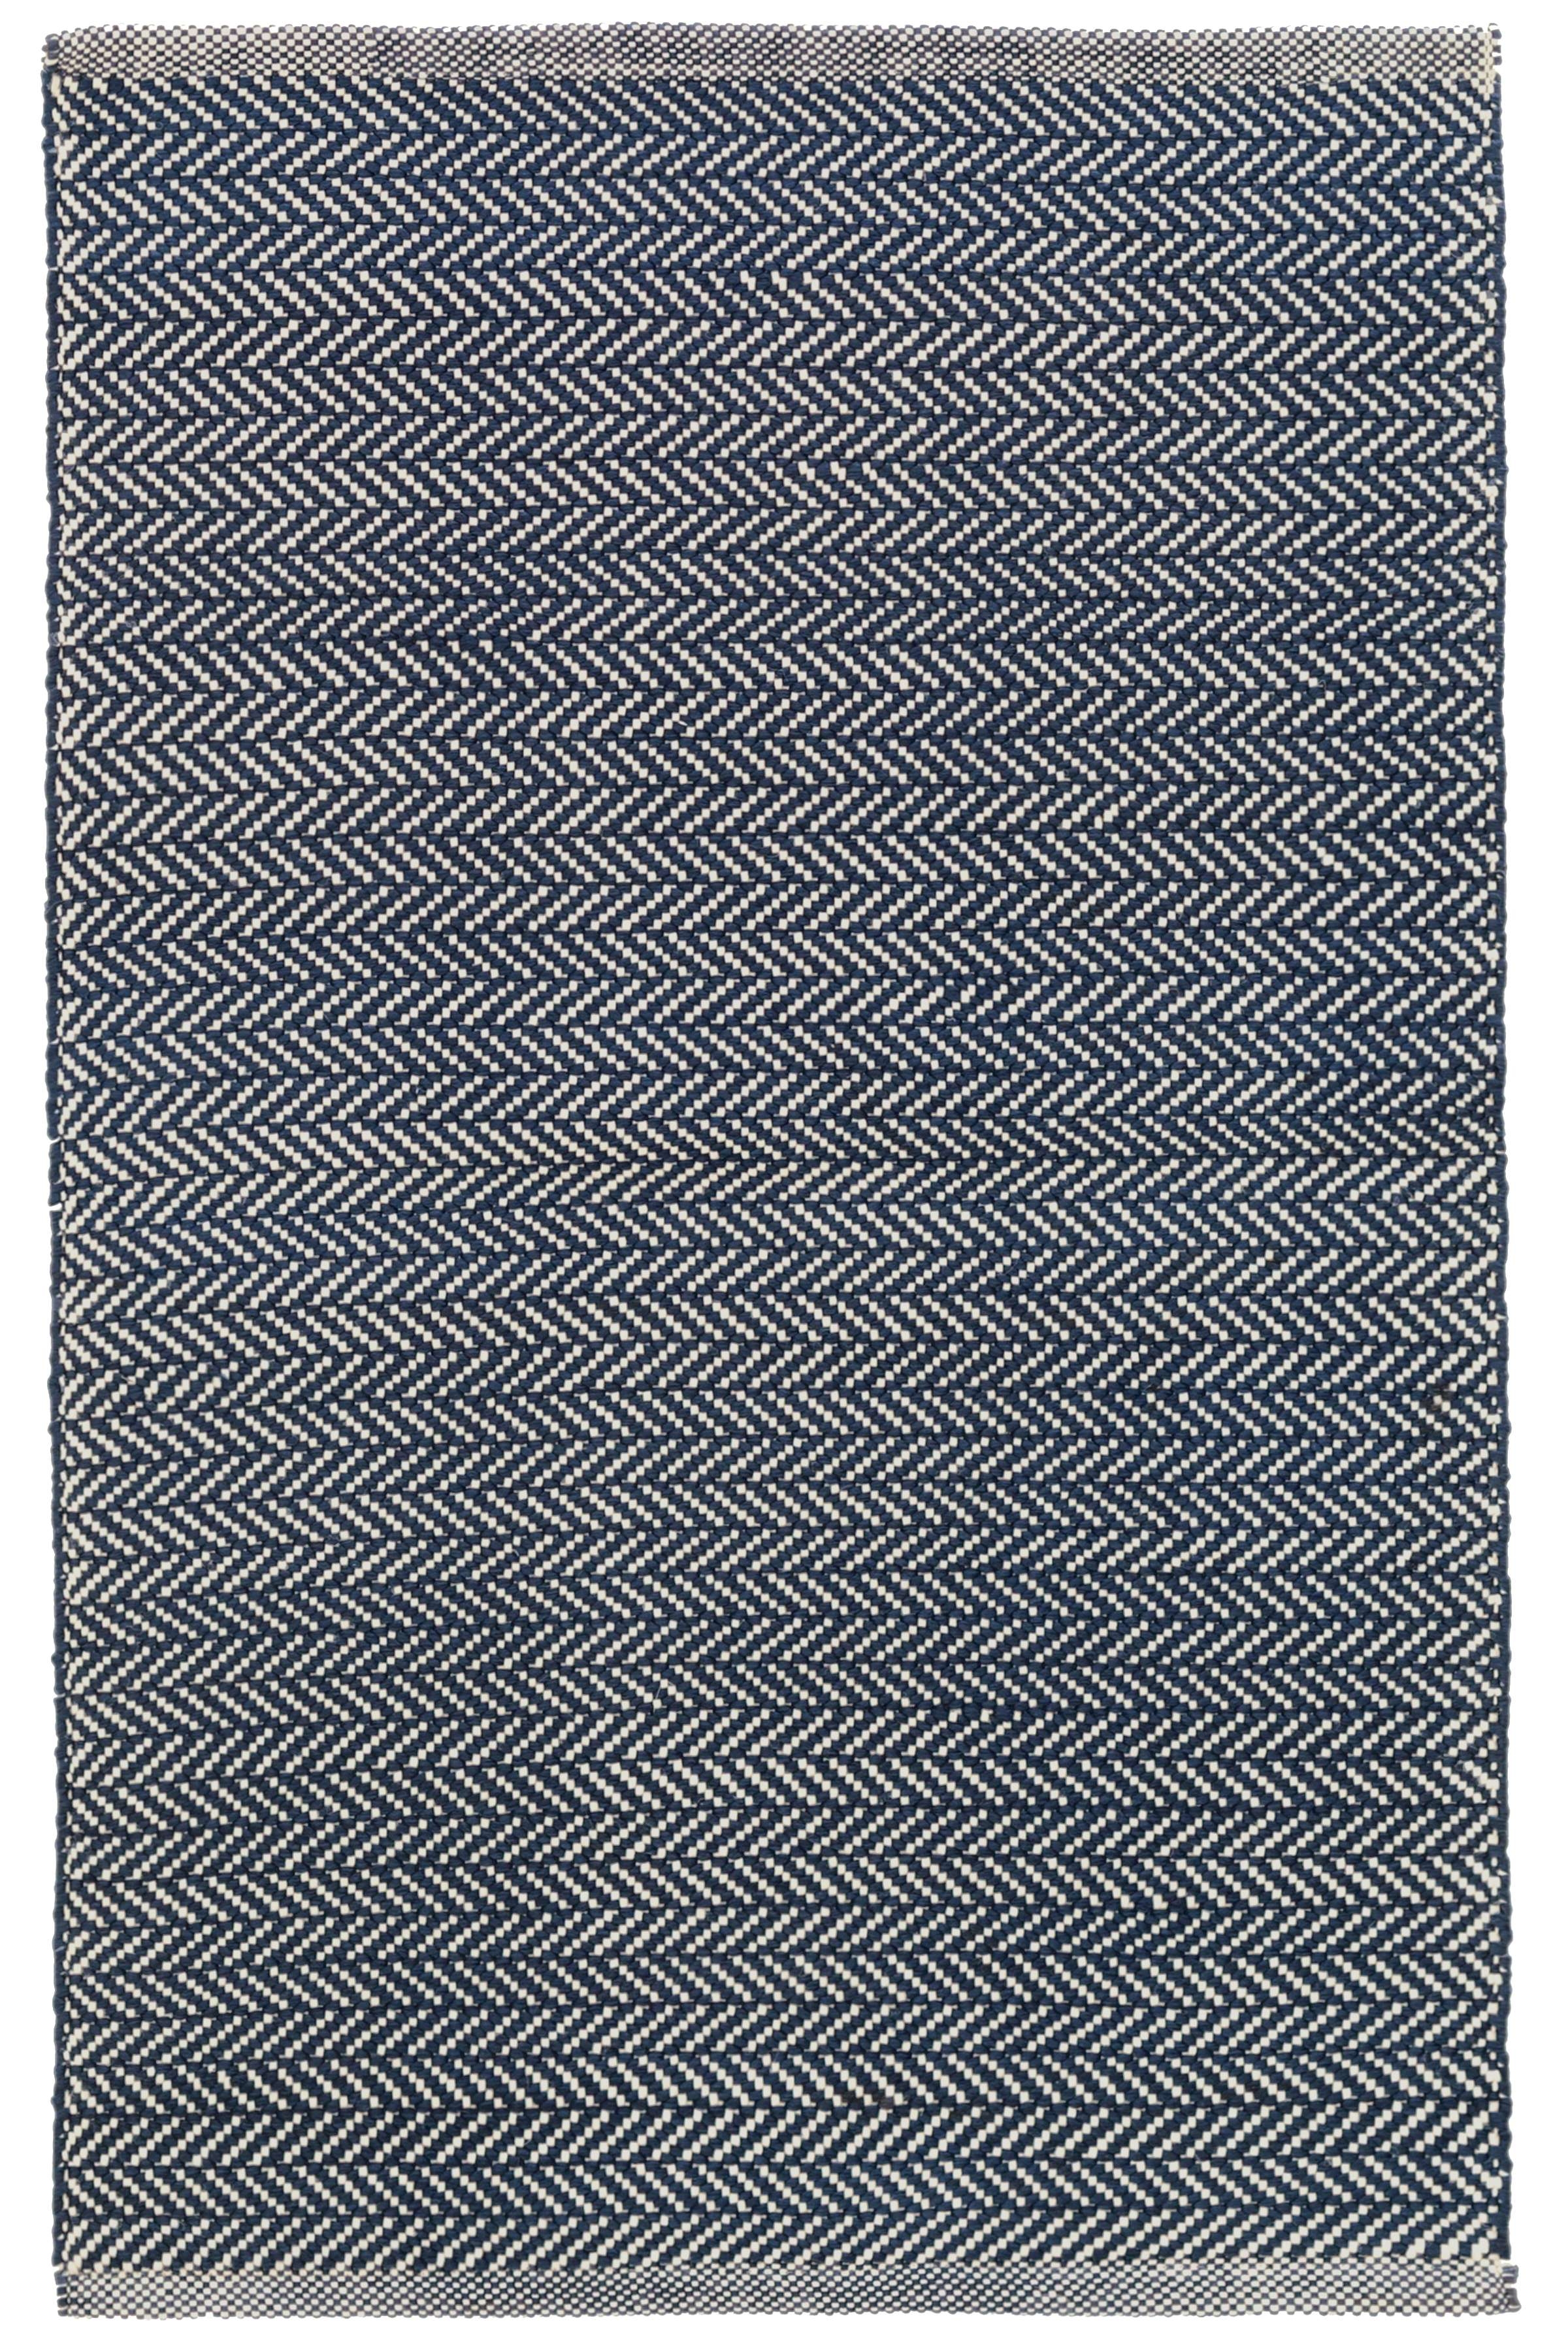 Herringbone Indigo Handwoven Cotton Rug - Image 0